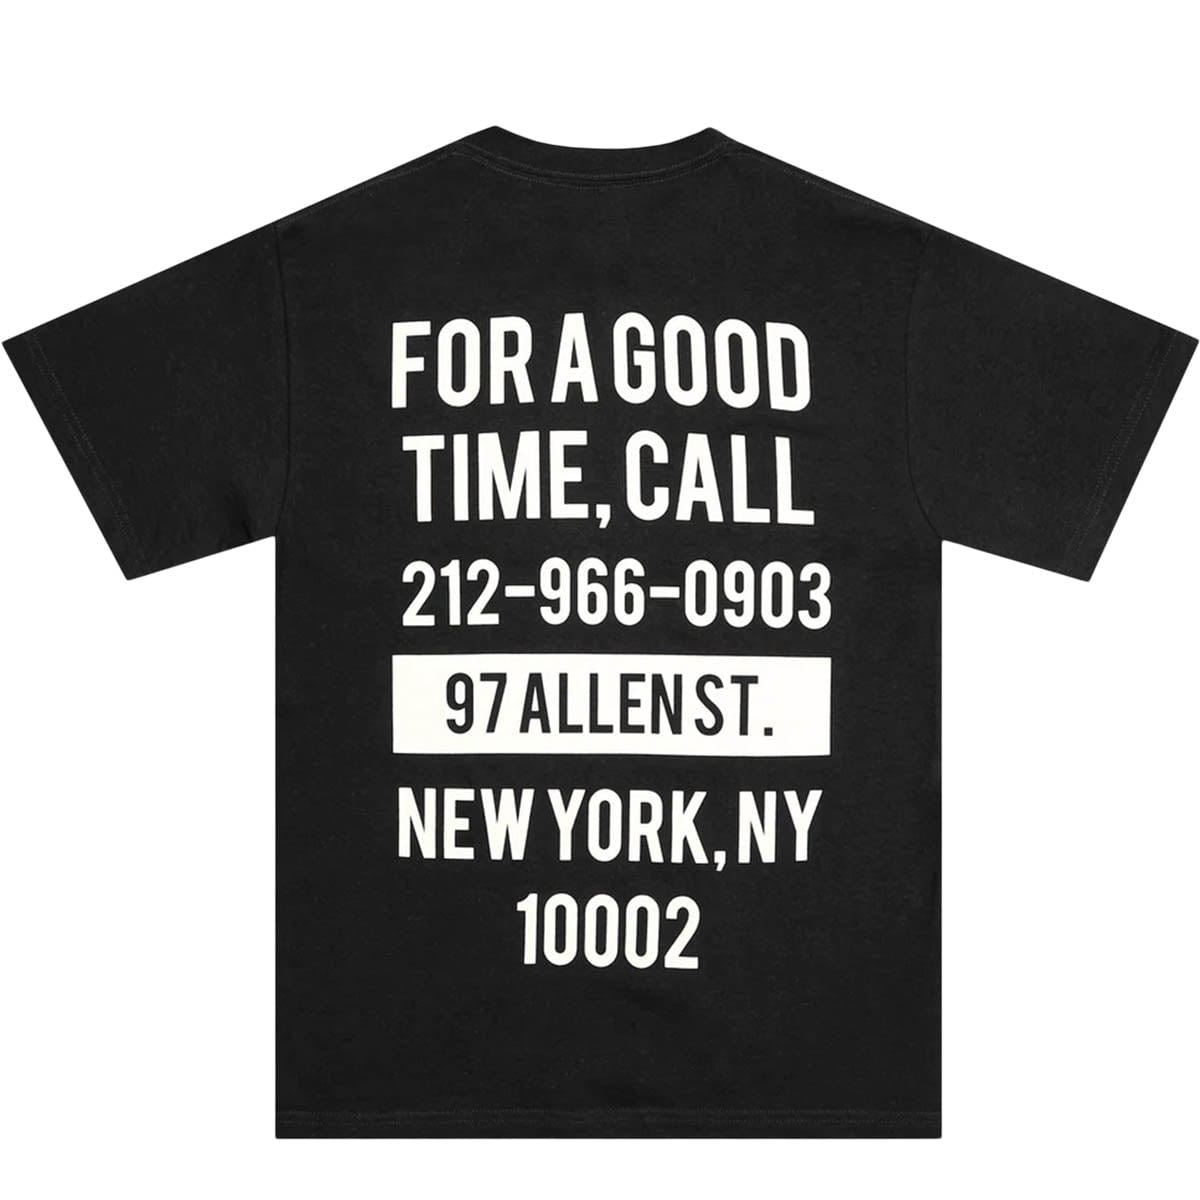 The Good Company T-Shirts A GOOD TIME T-SHIRT